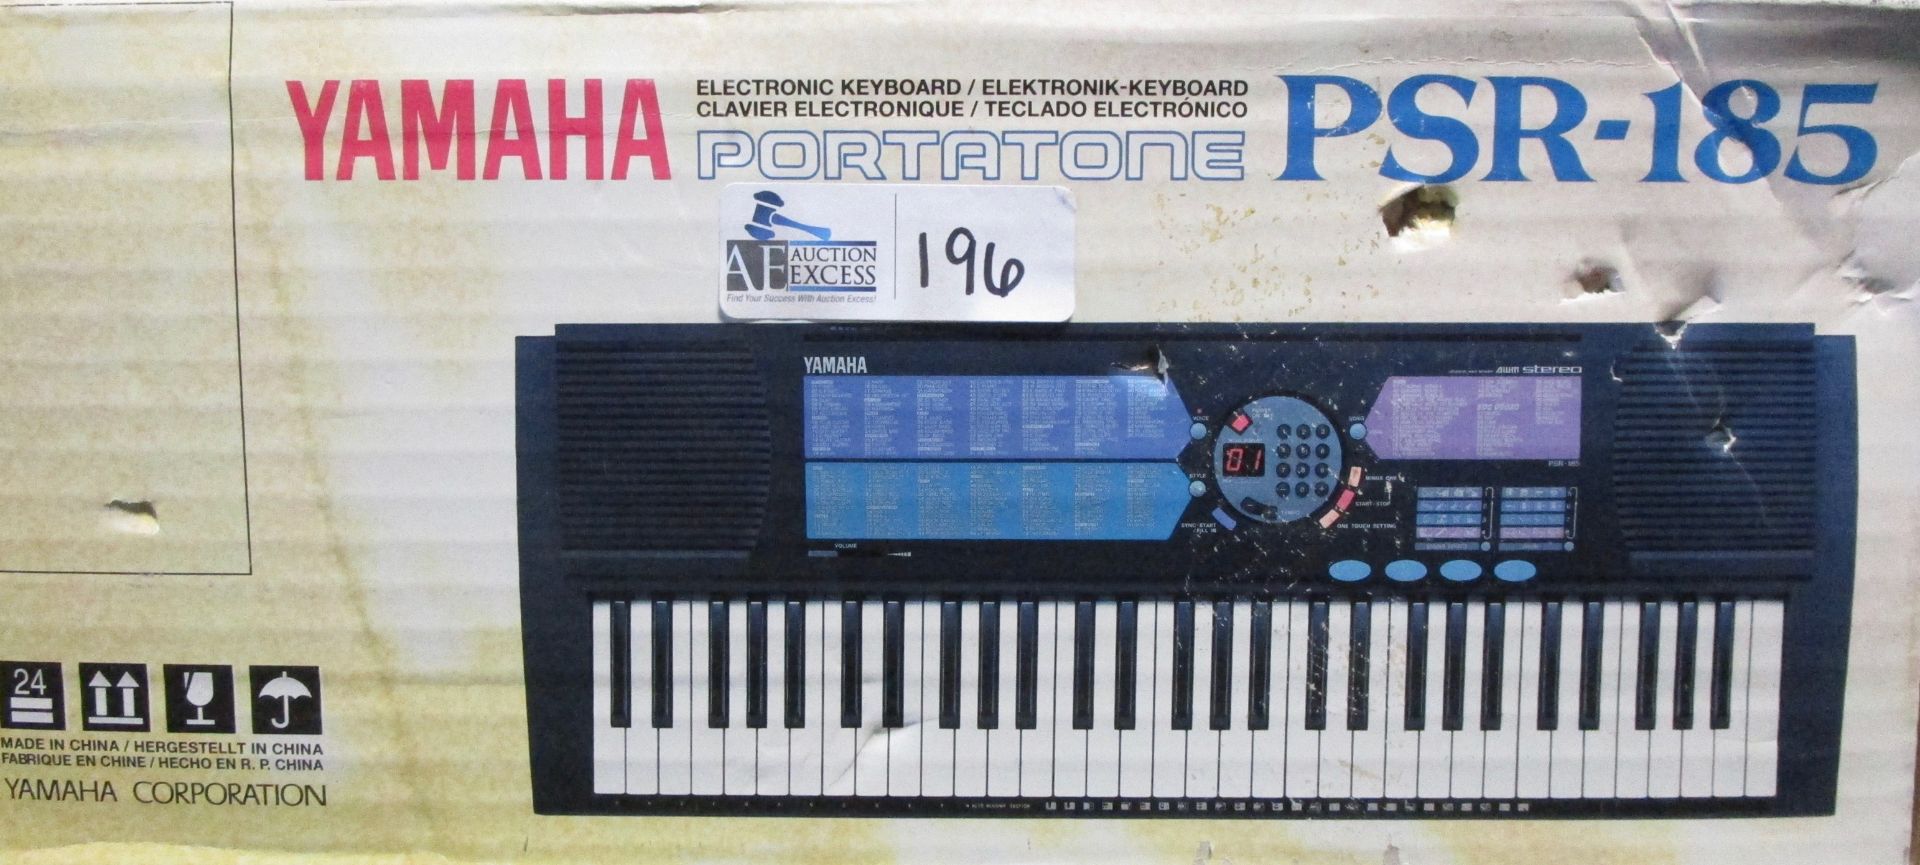 YAMAHA PORTATONE PSR-15 IN ORIGINAL BOX